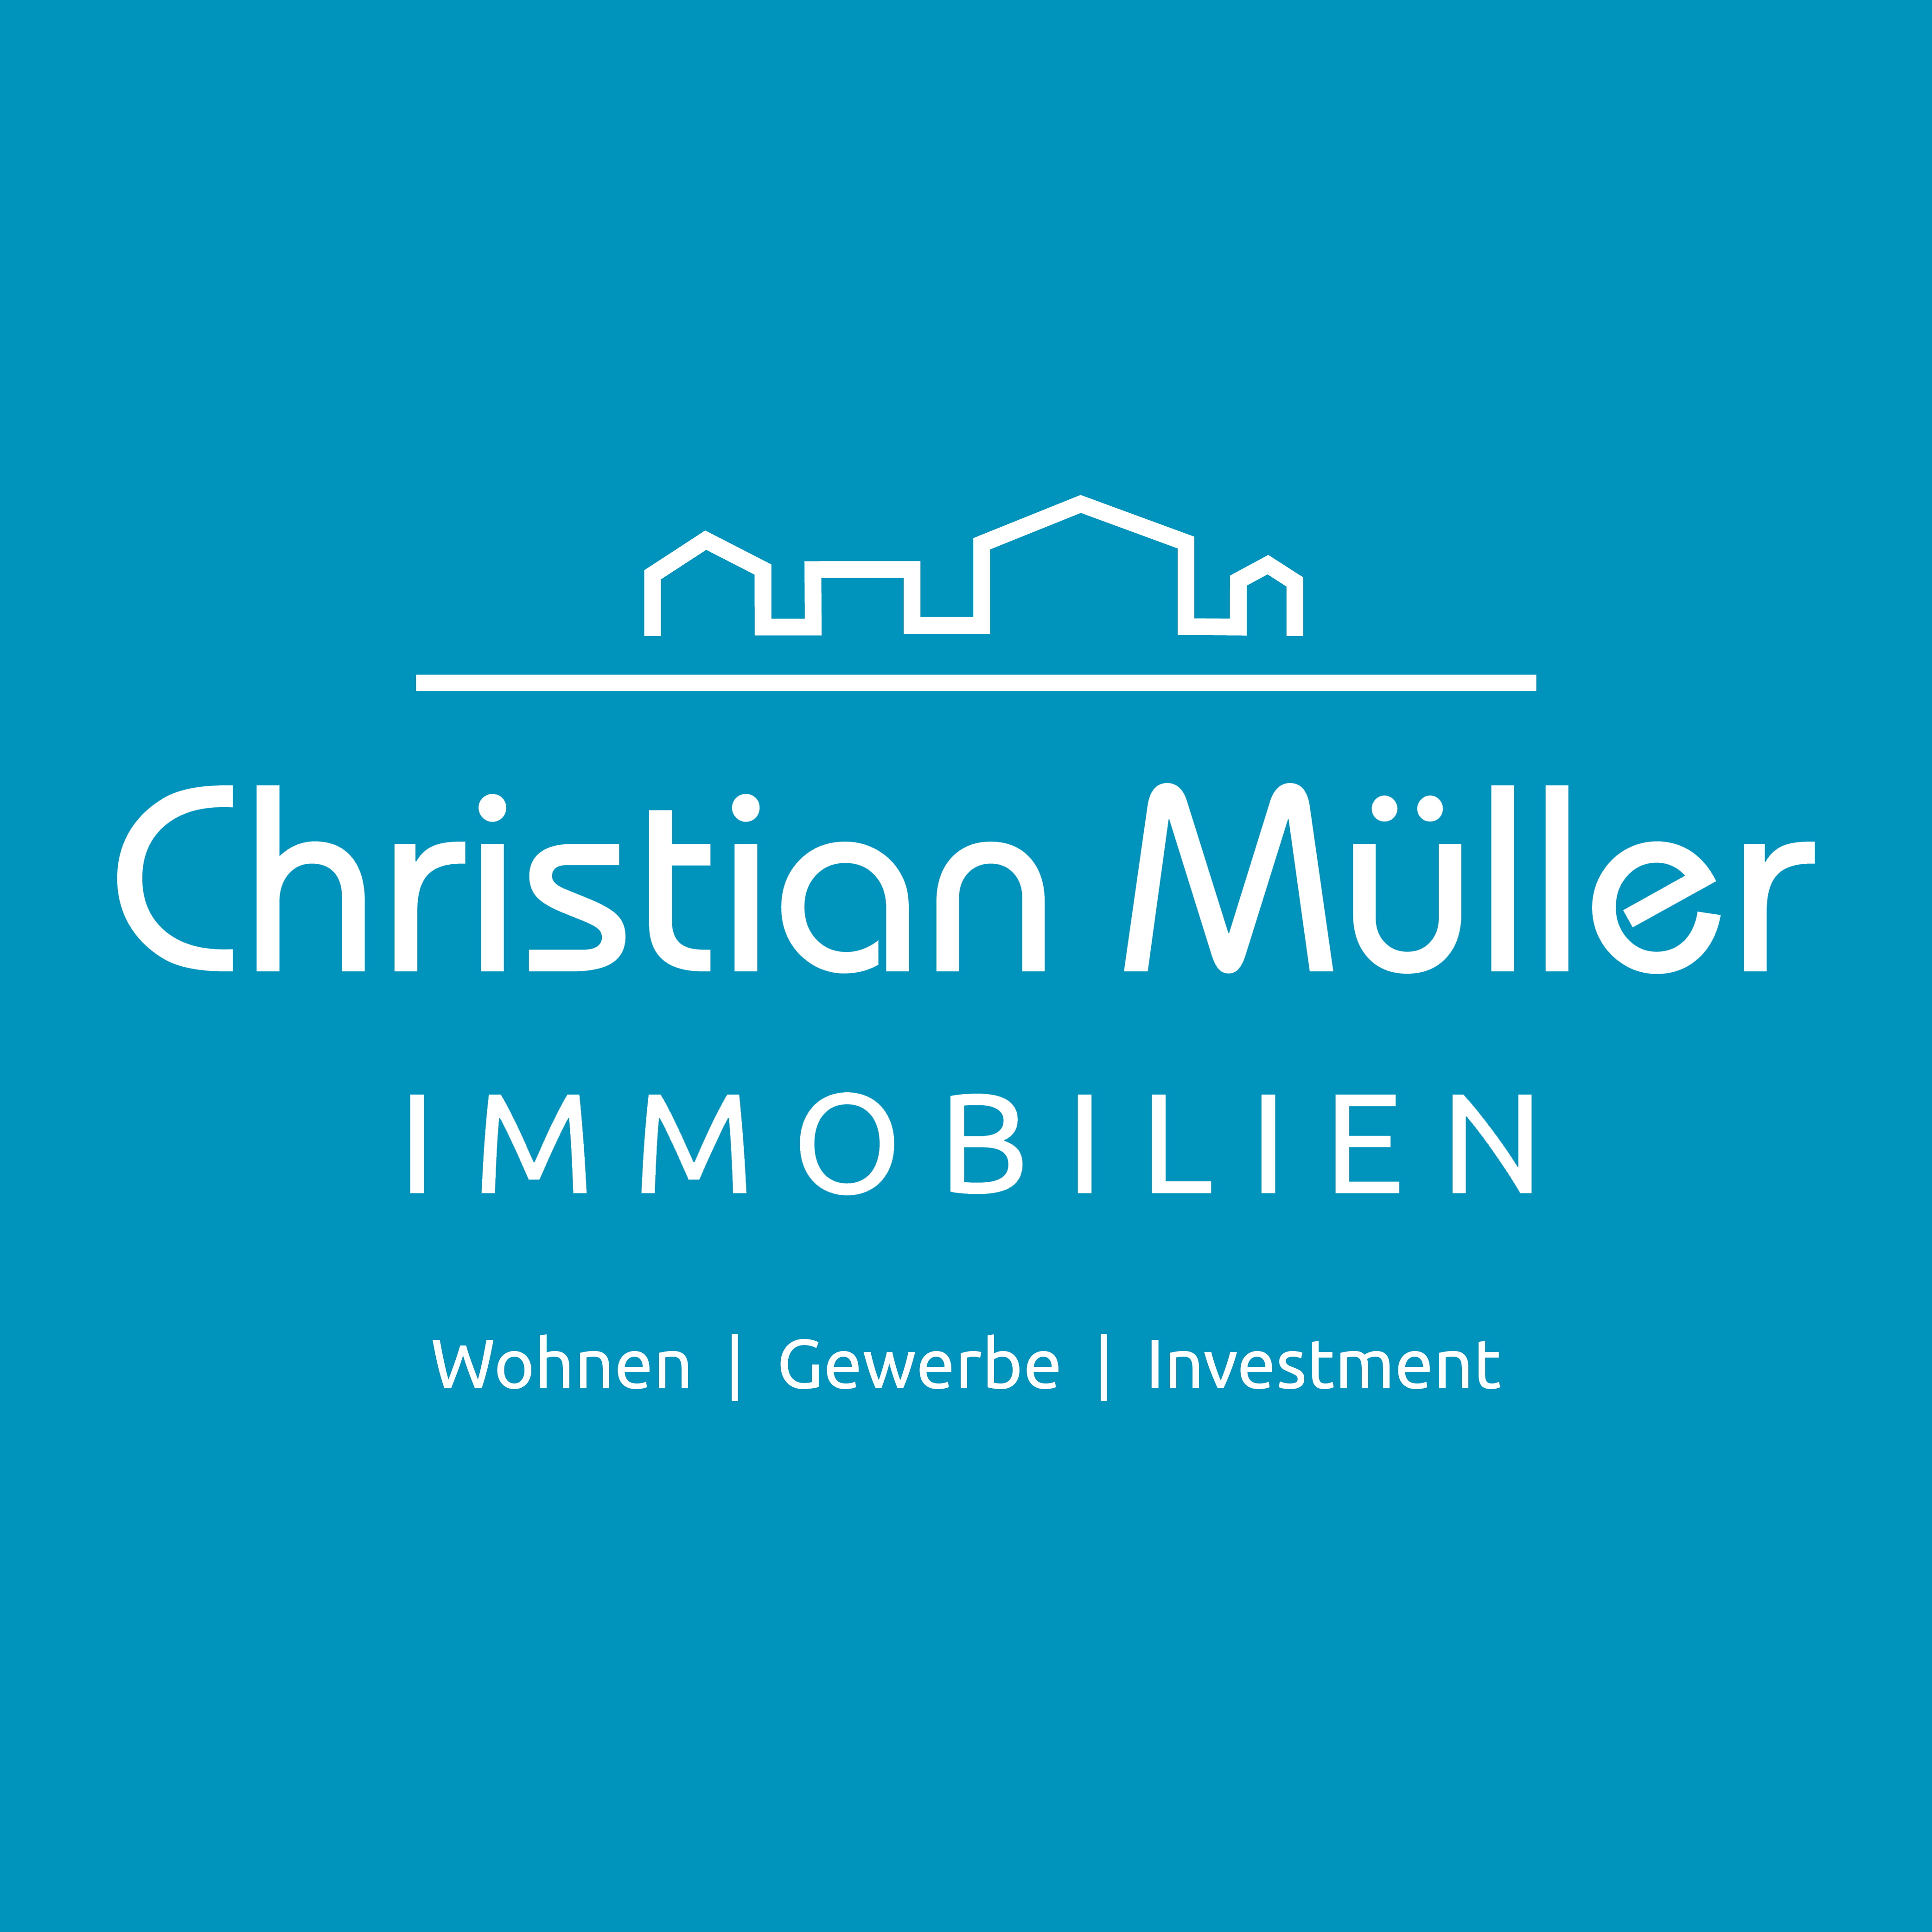 Christian-Müller-Immobilien-4C-subtext4